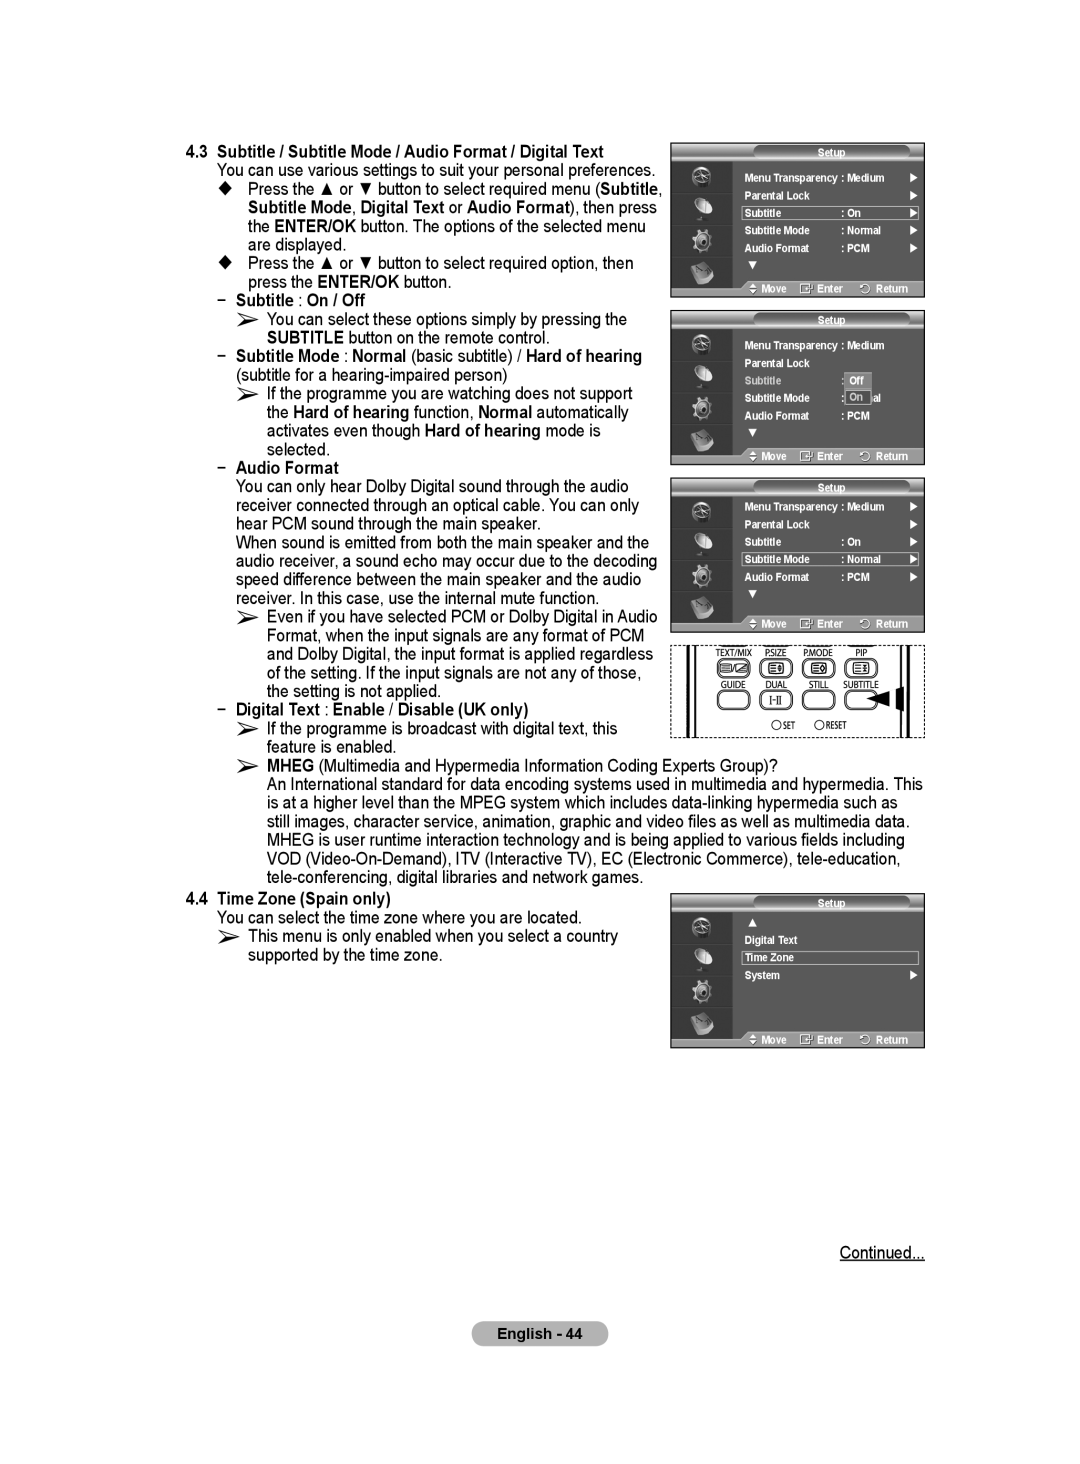 Samsung BN68-01171B-03 manual are displayed 